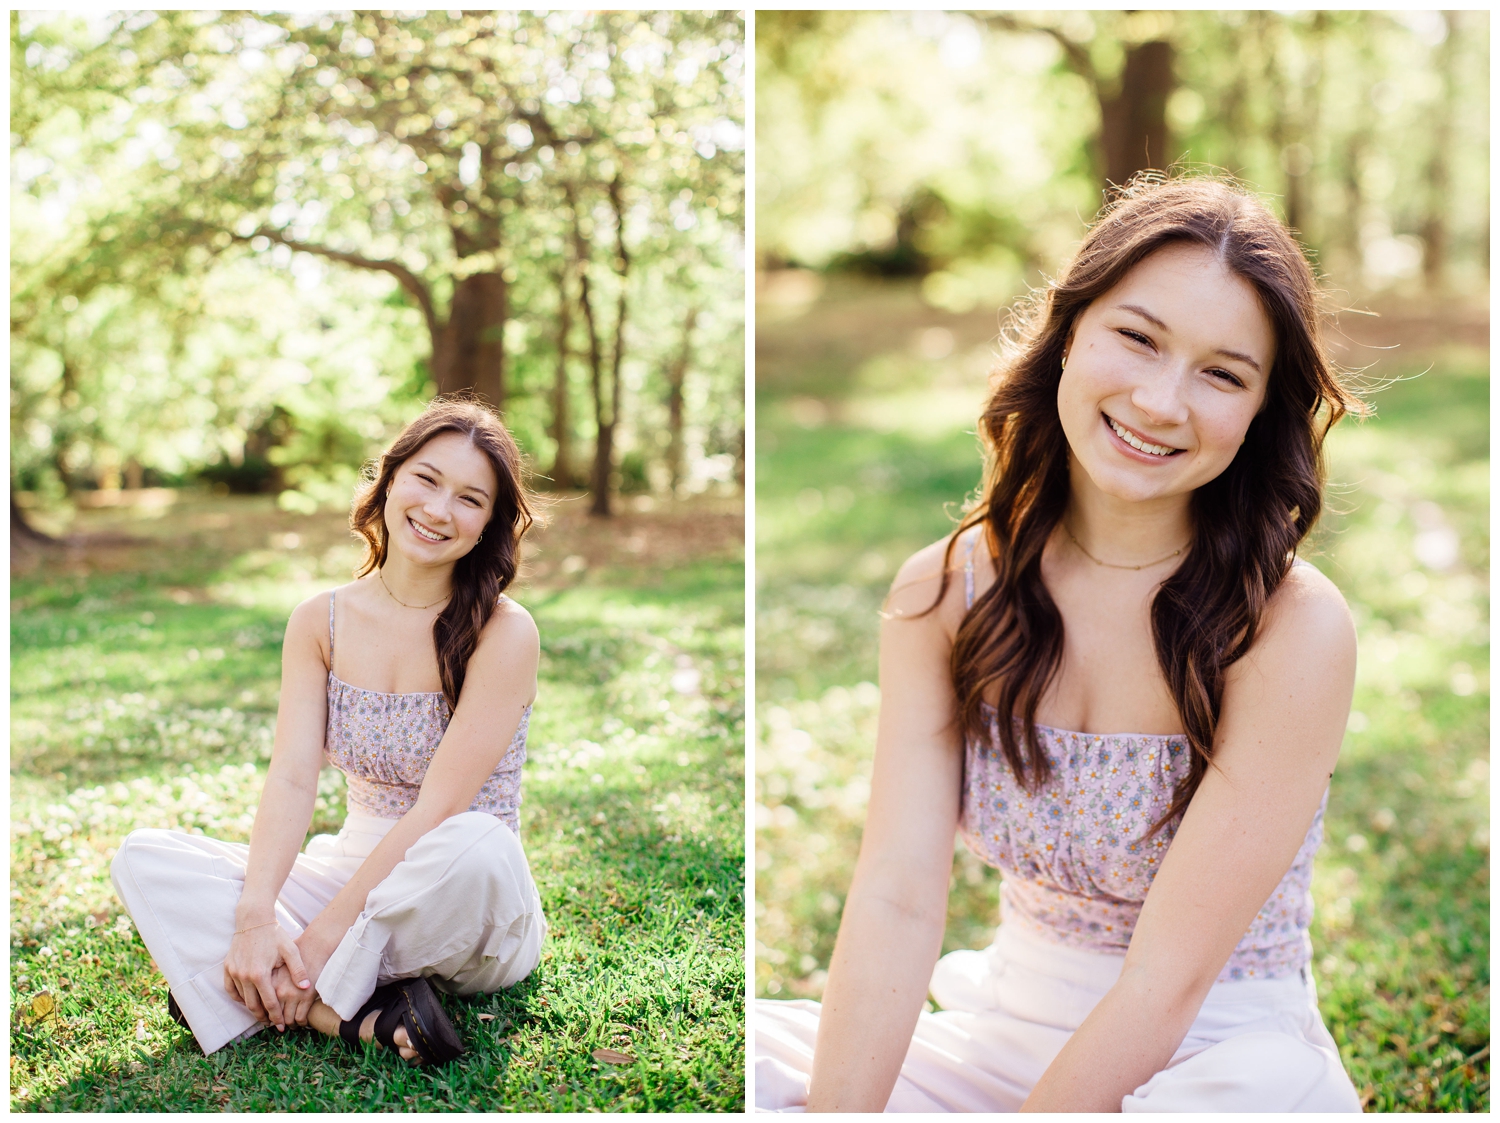 Houston high school senior girl sitting on grass in white pants and flower top smiling